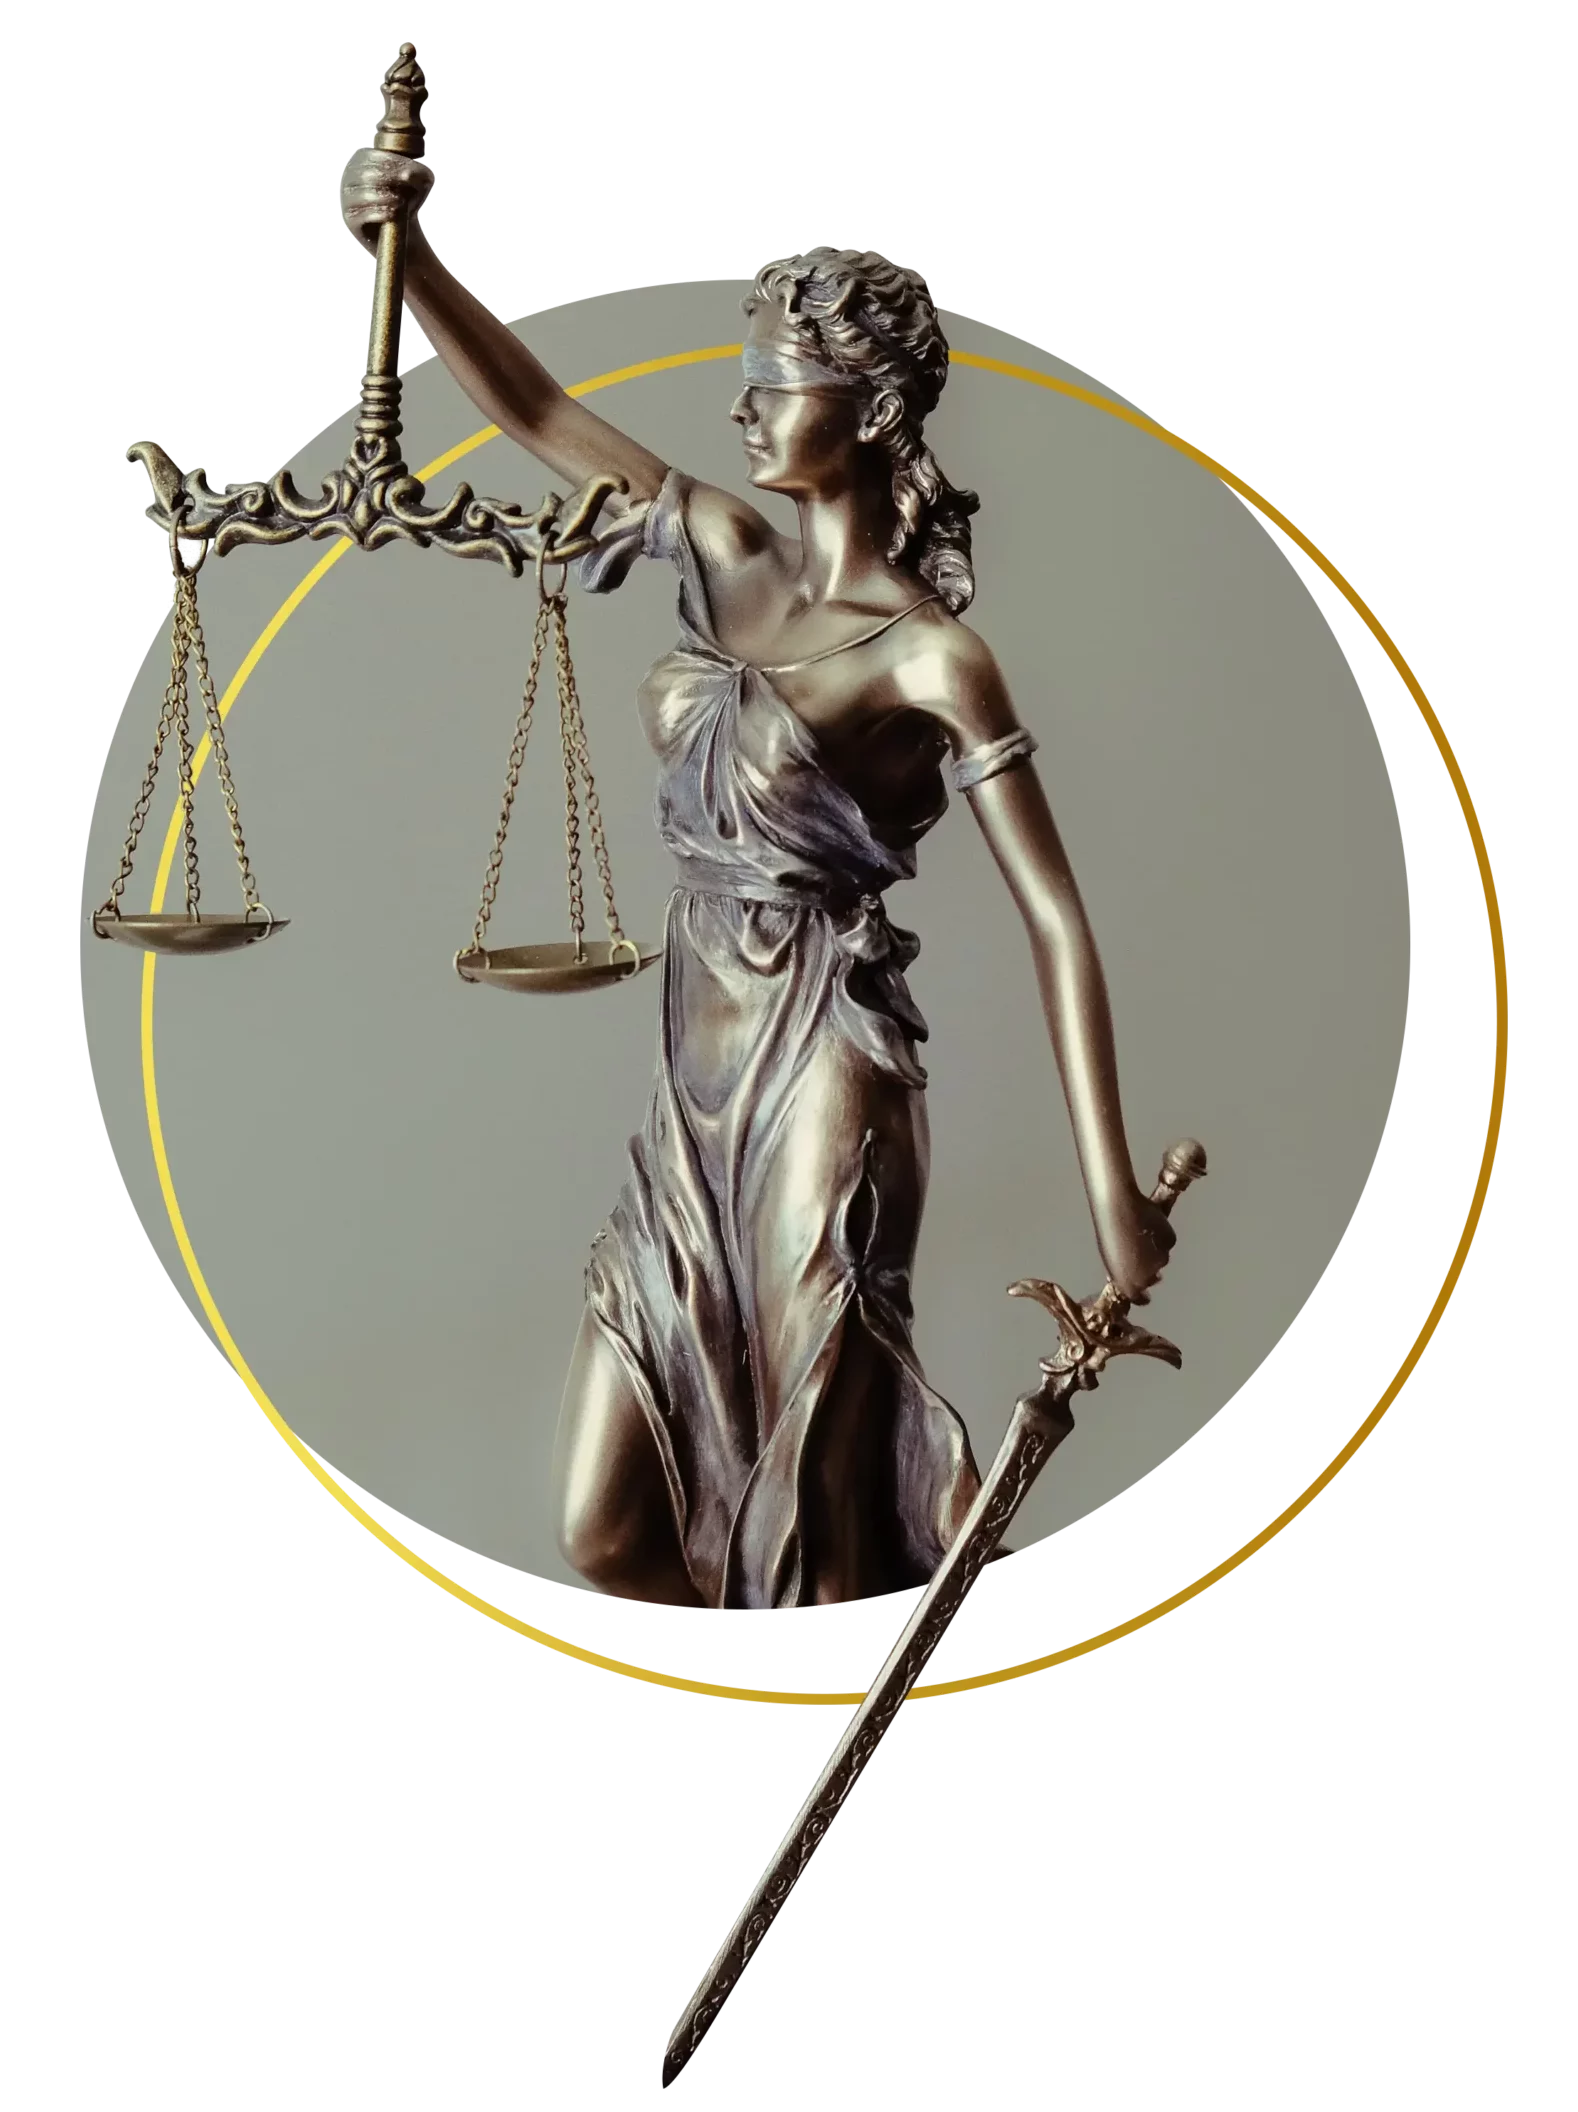 Themis - Kremenchuker Law Group. Professional legal advice